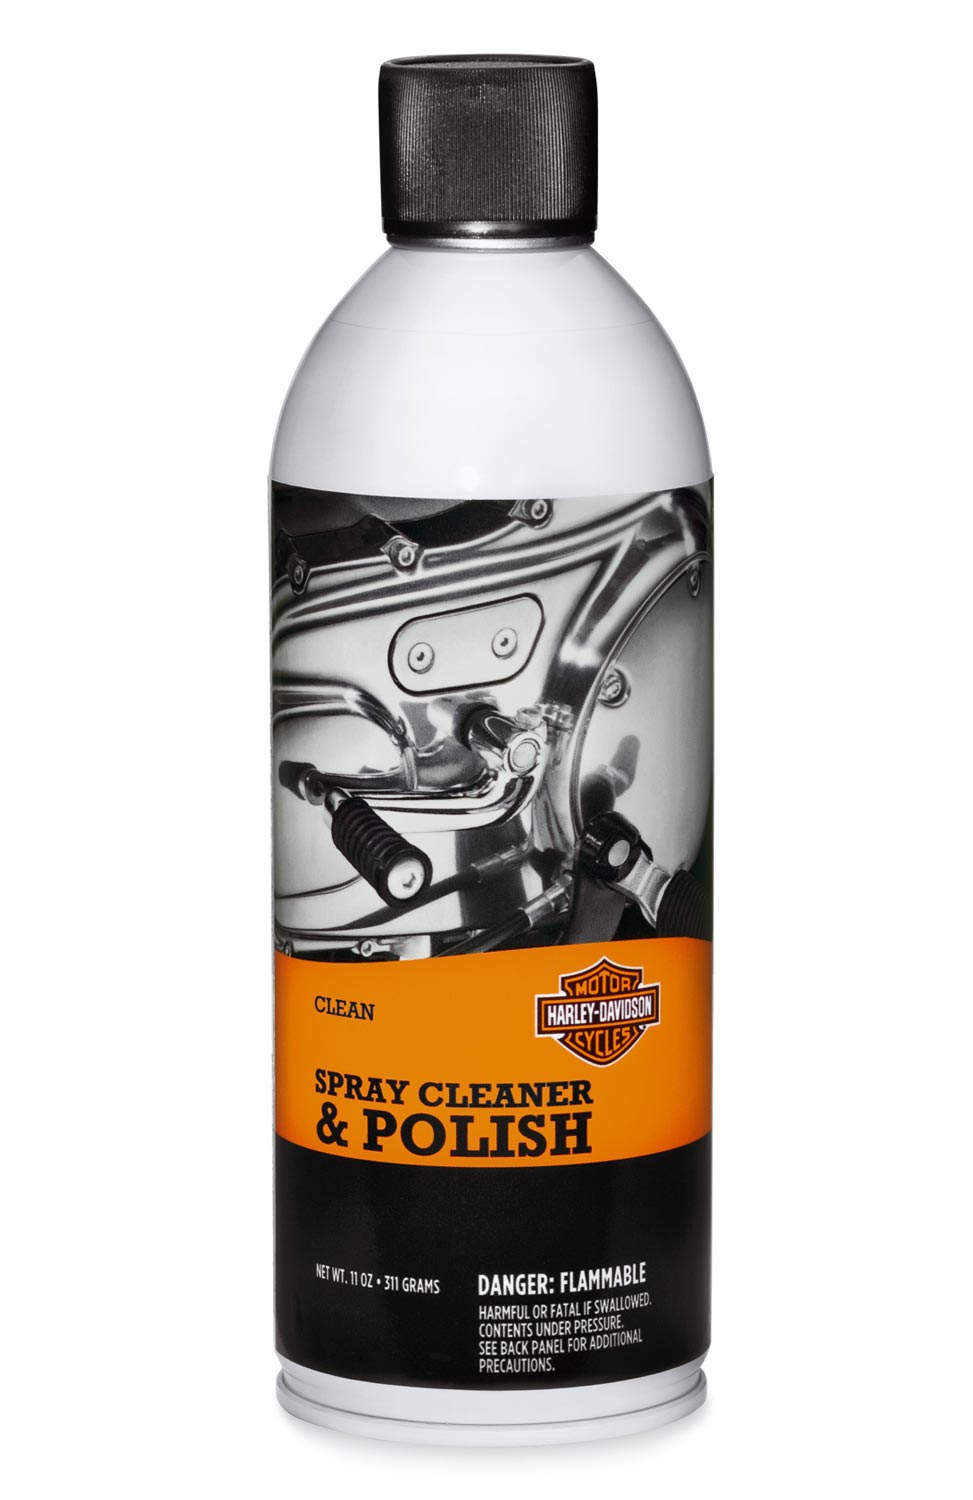 93600084 Harley Davidson Spray Cleaner Polish 311g